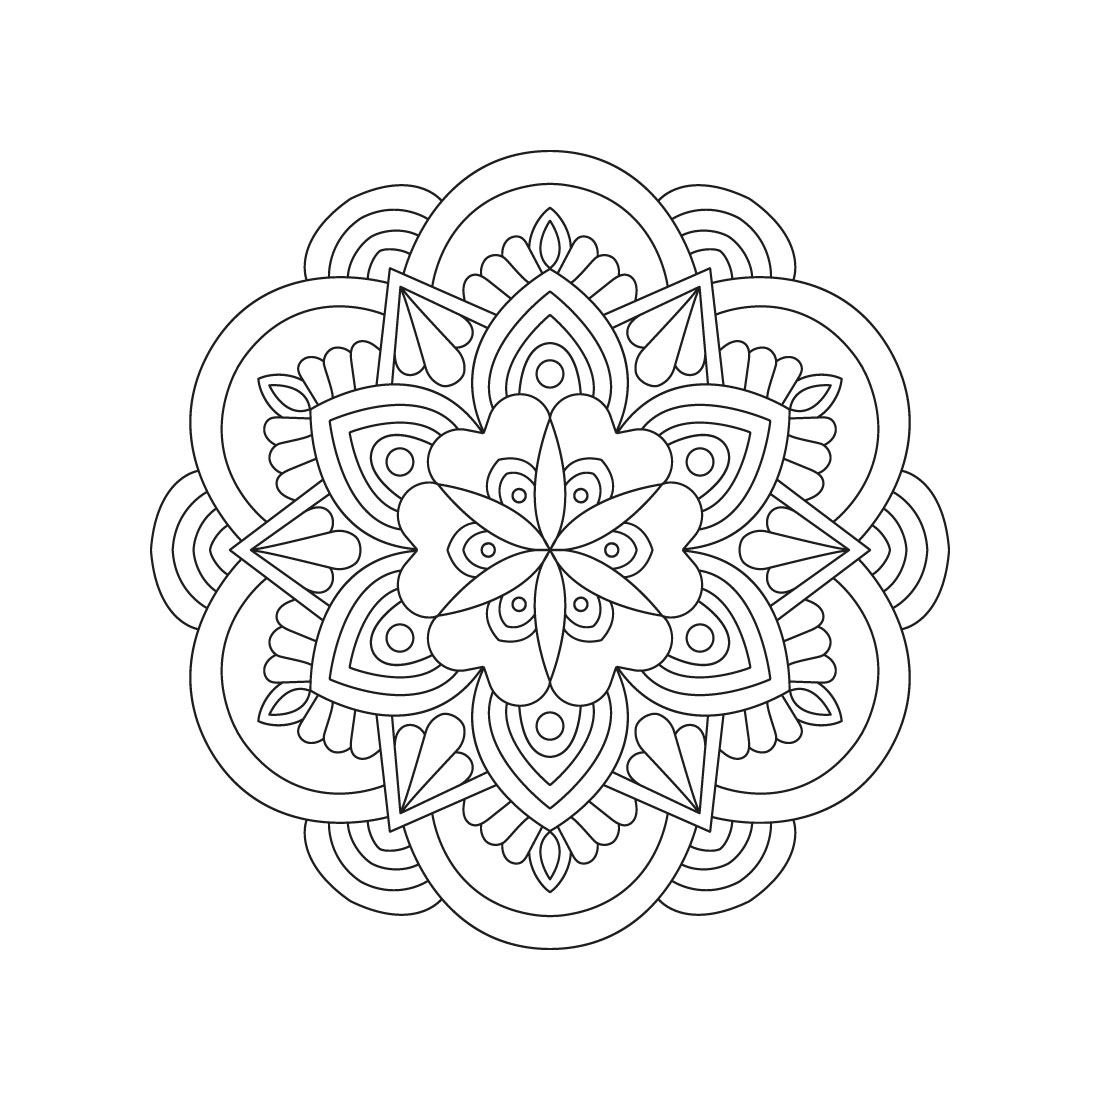 bundle of 10 celtic peaceful mandala coloring book pages 03 199